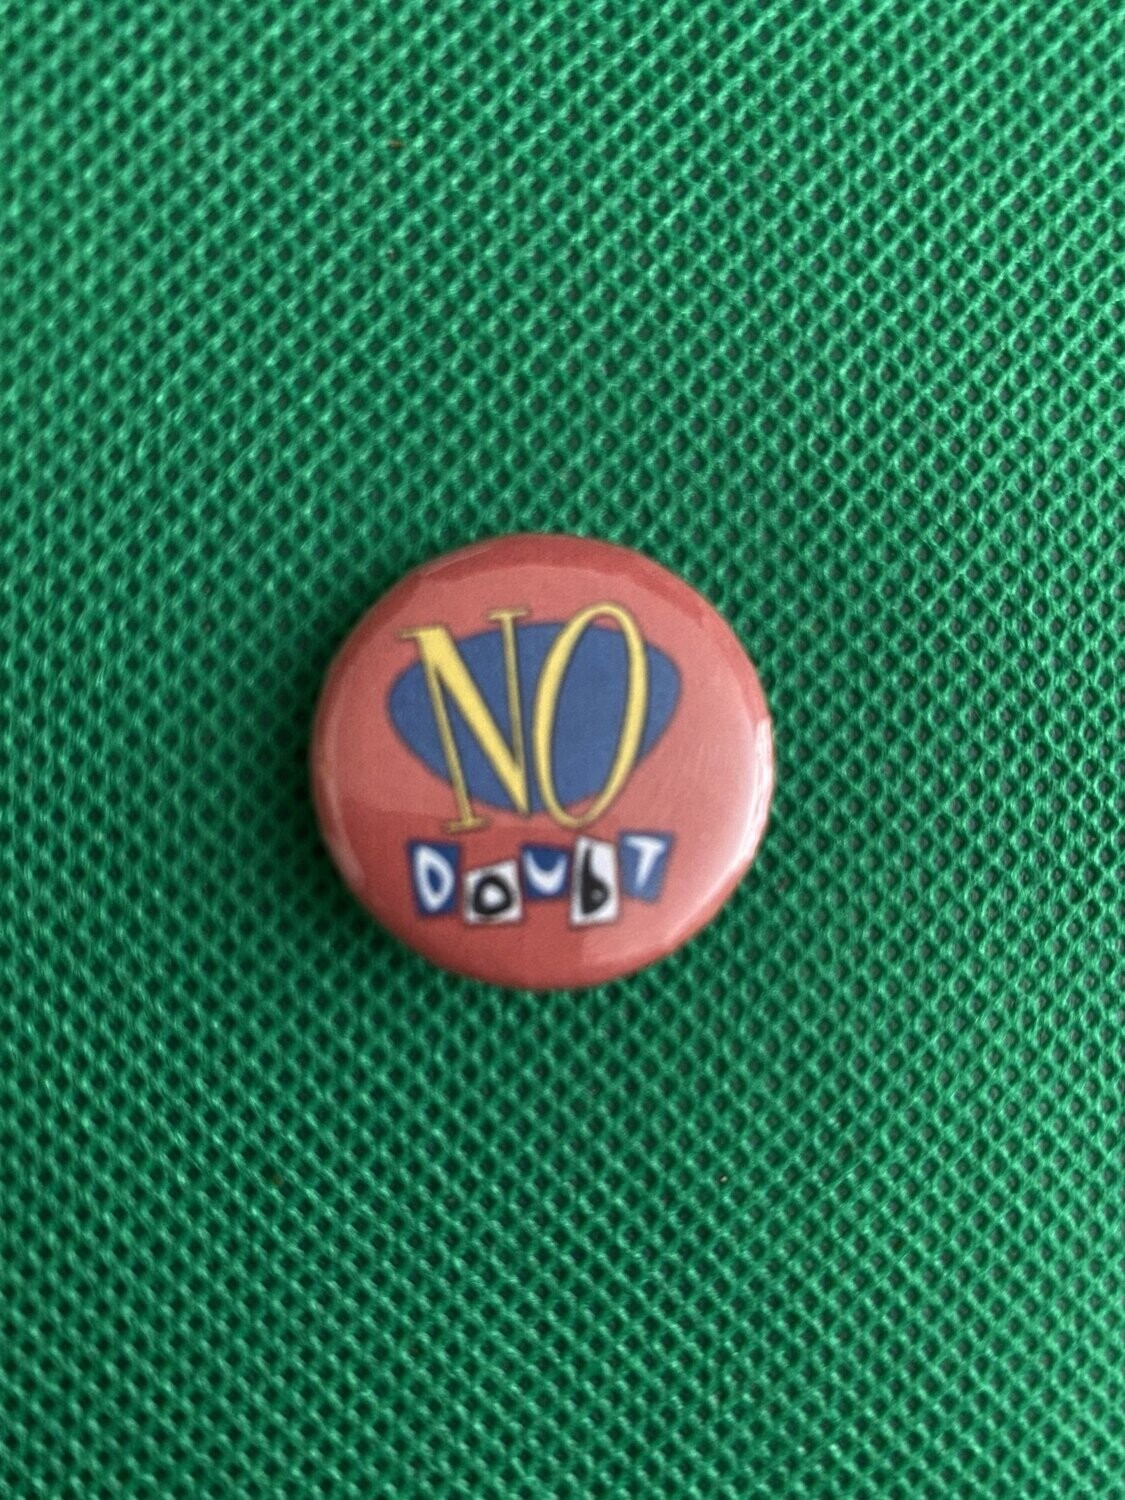 No Doubt Badge